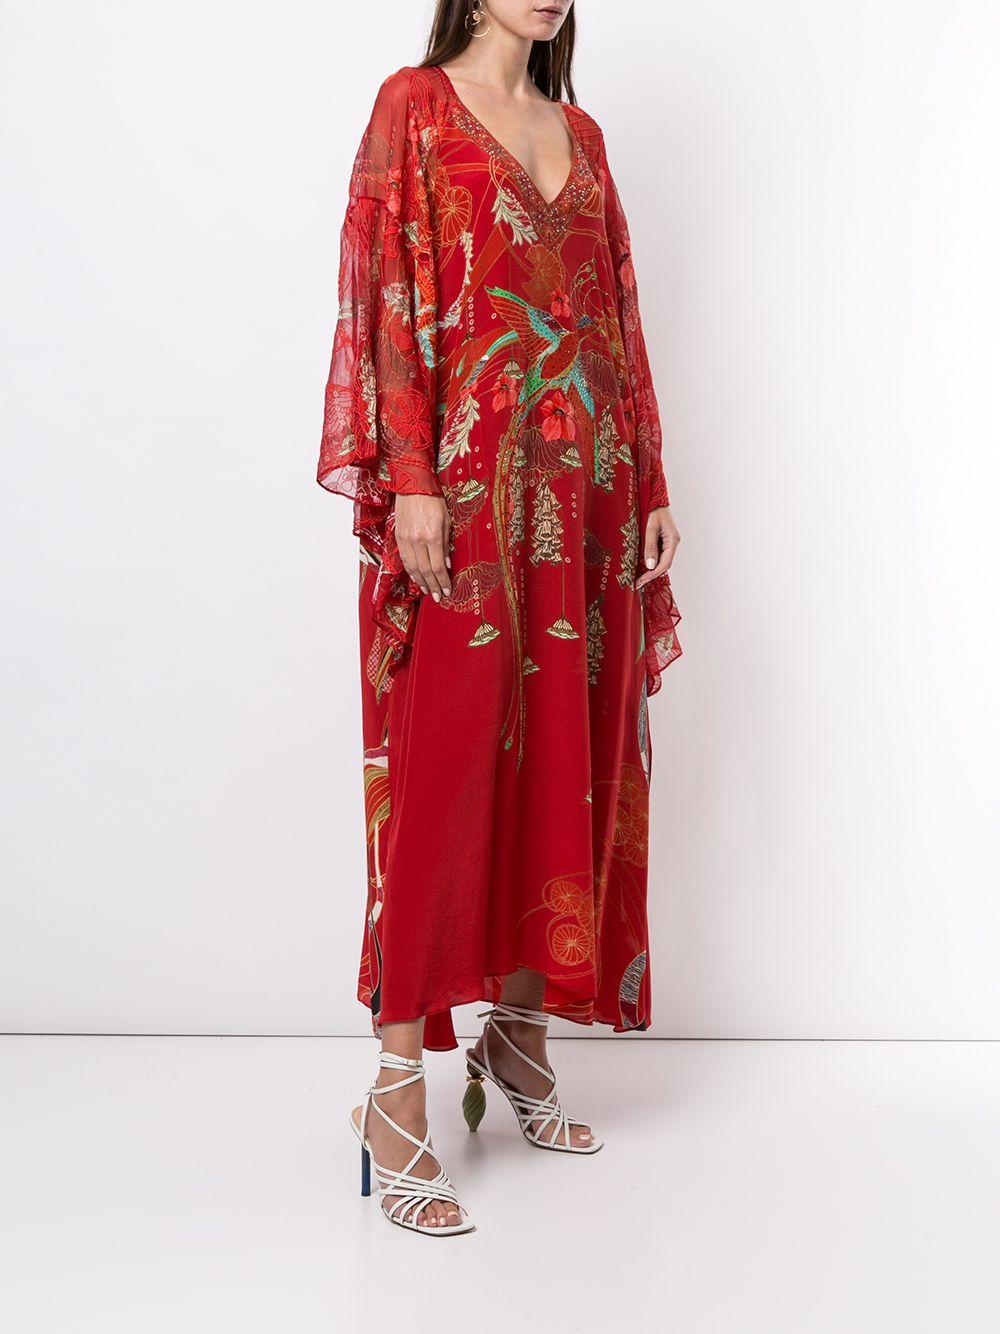 Camilla Silk Forbidden Fruit Dress in Red - Lyst